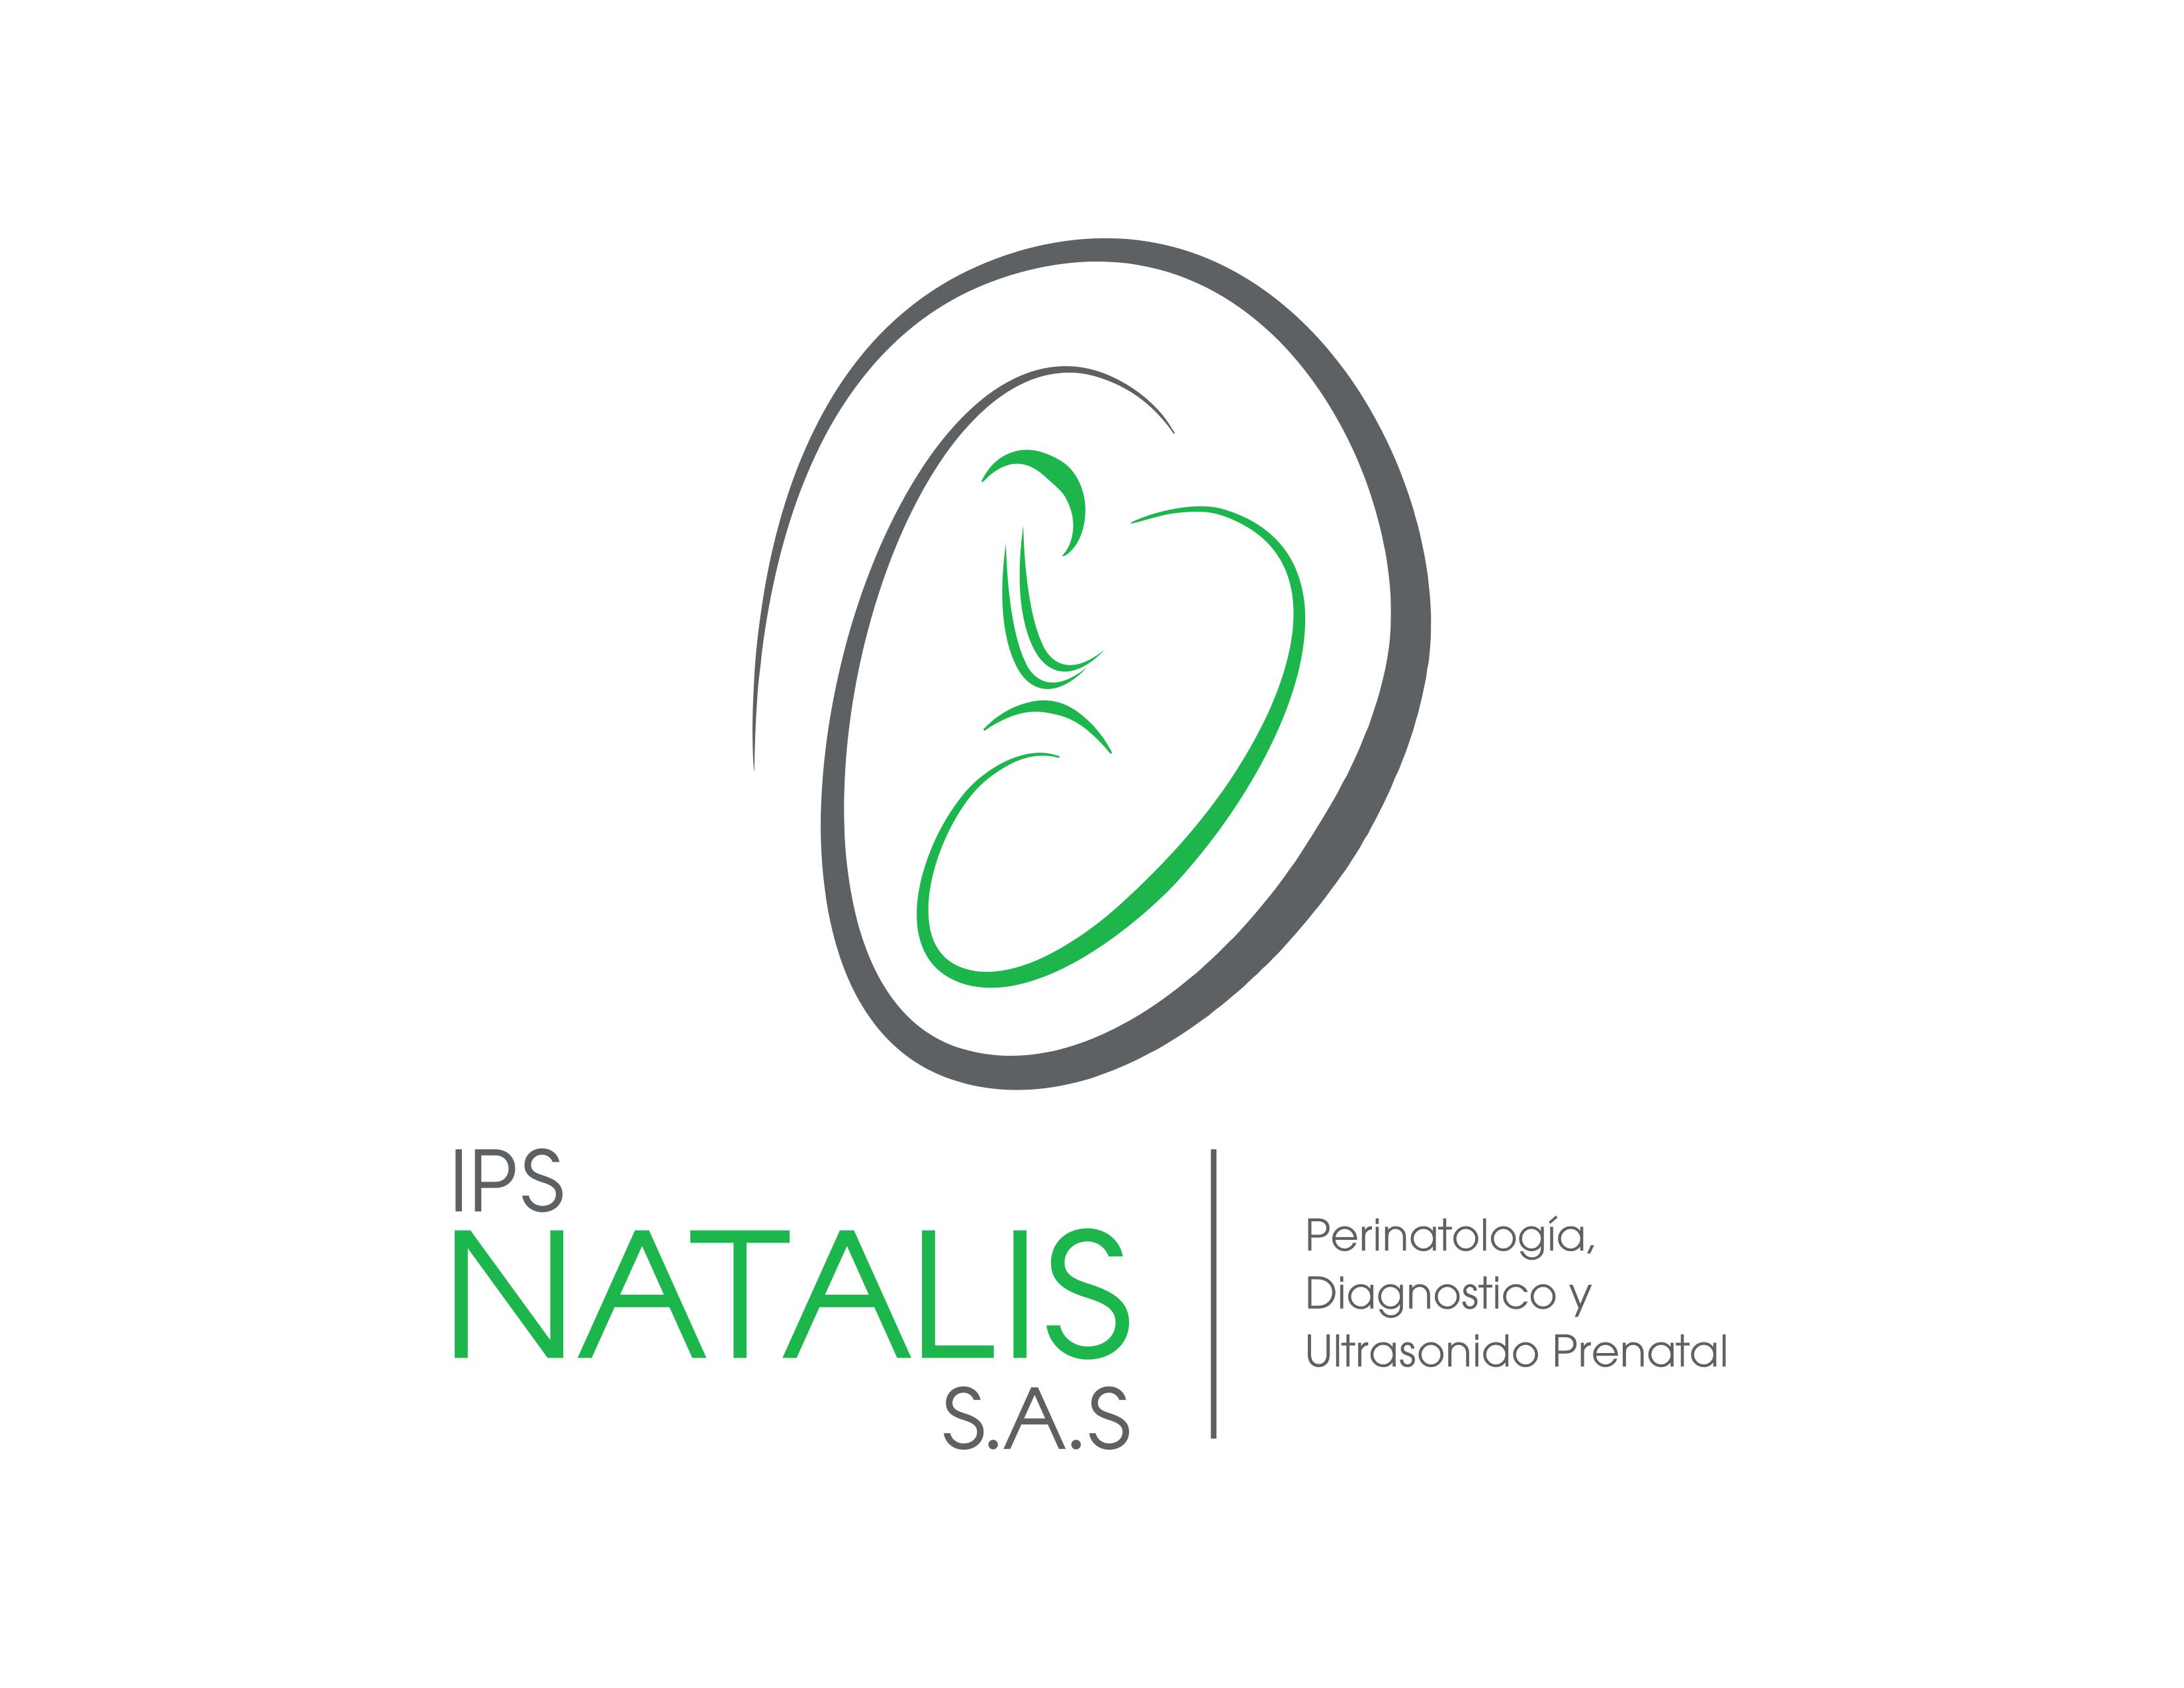 IPS NATALIS